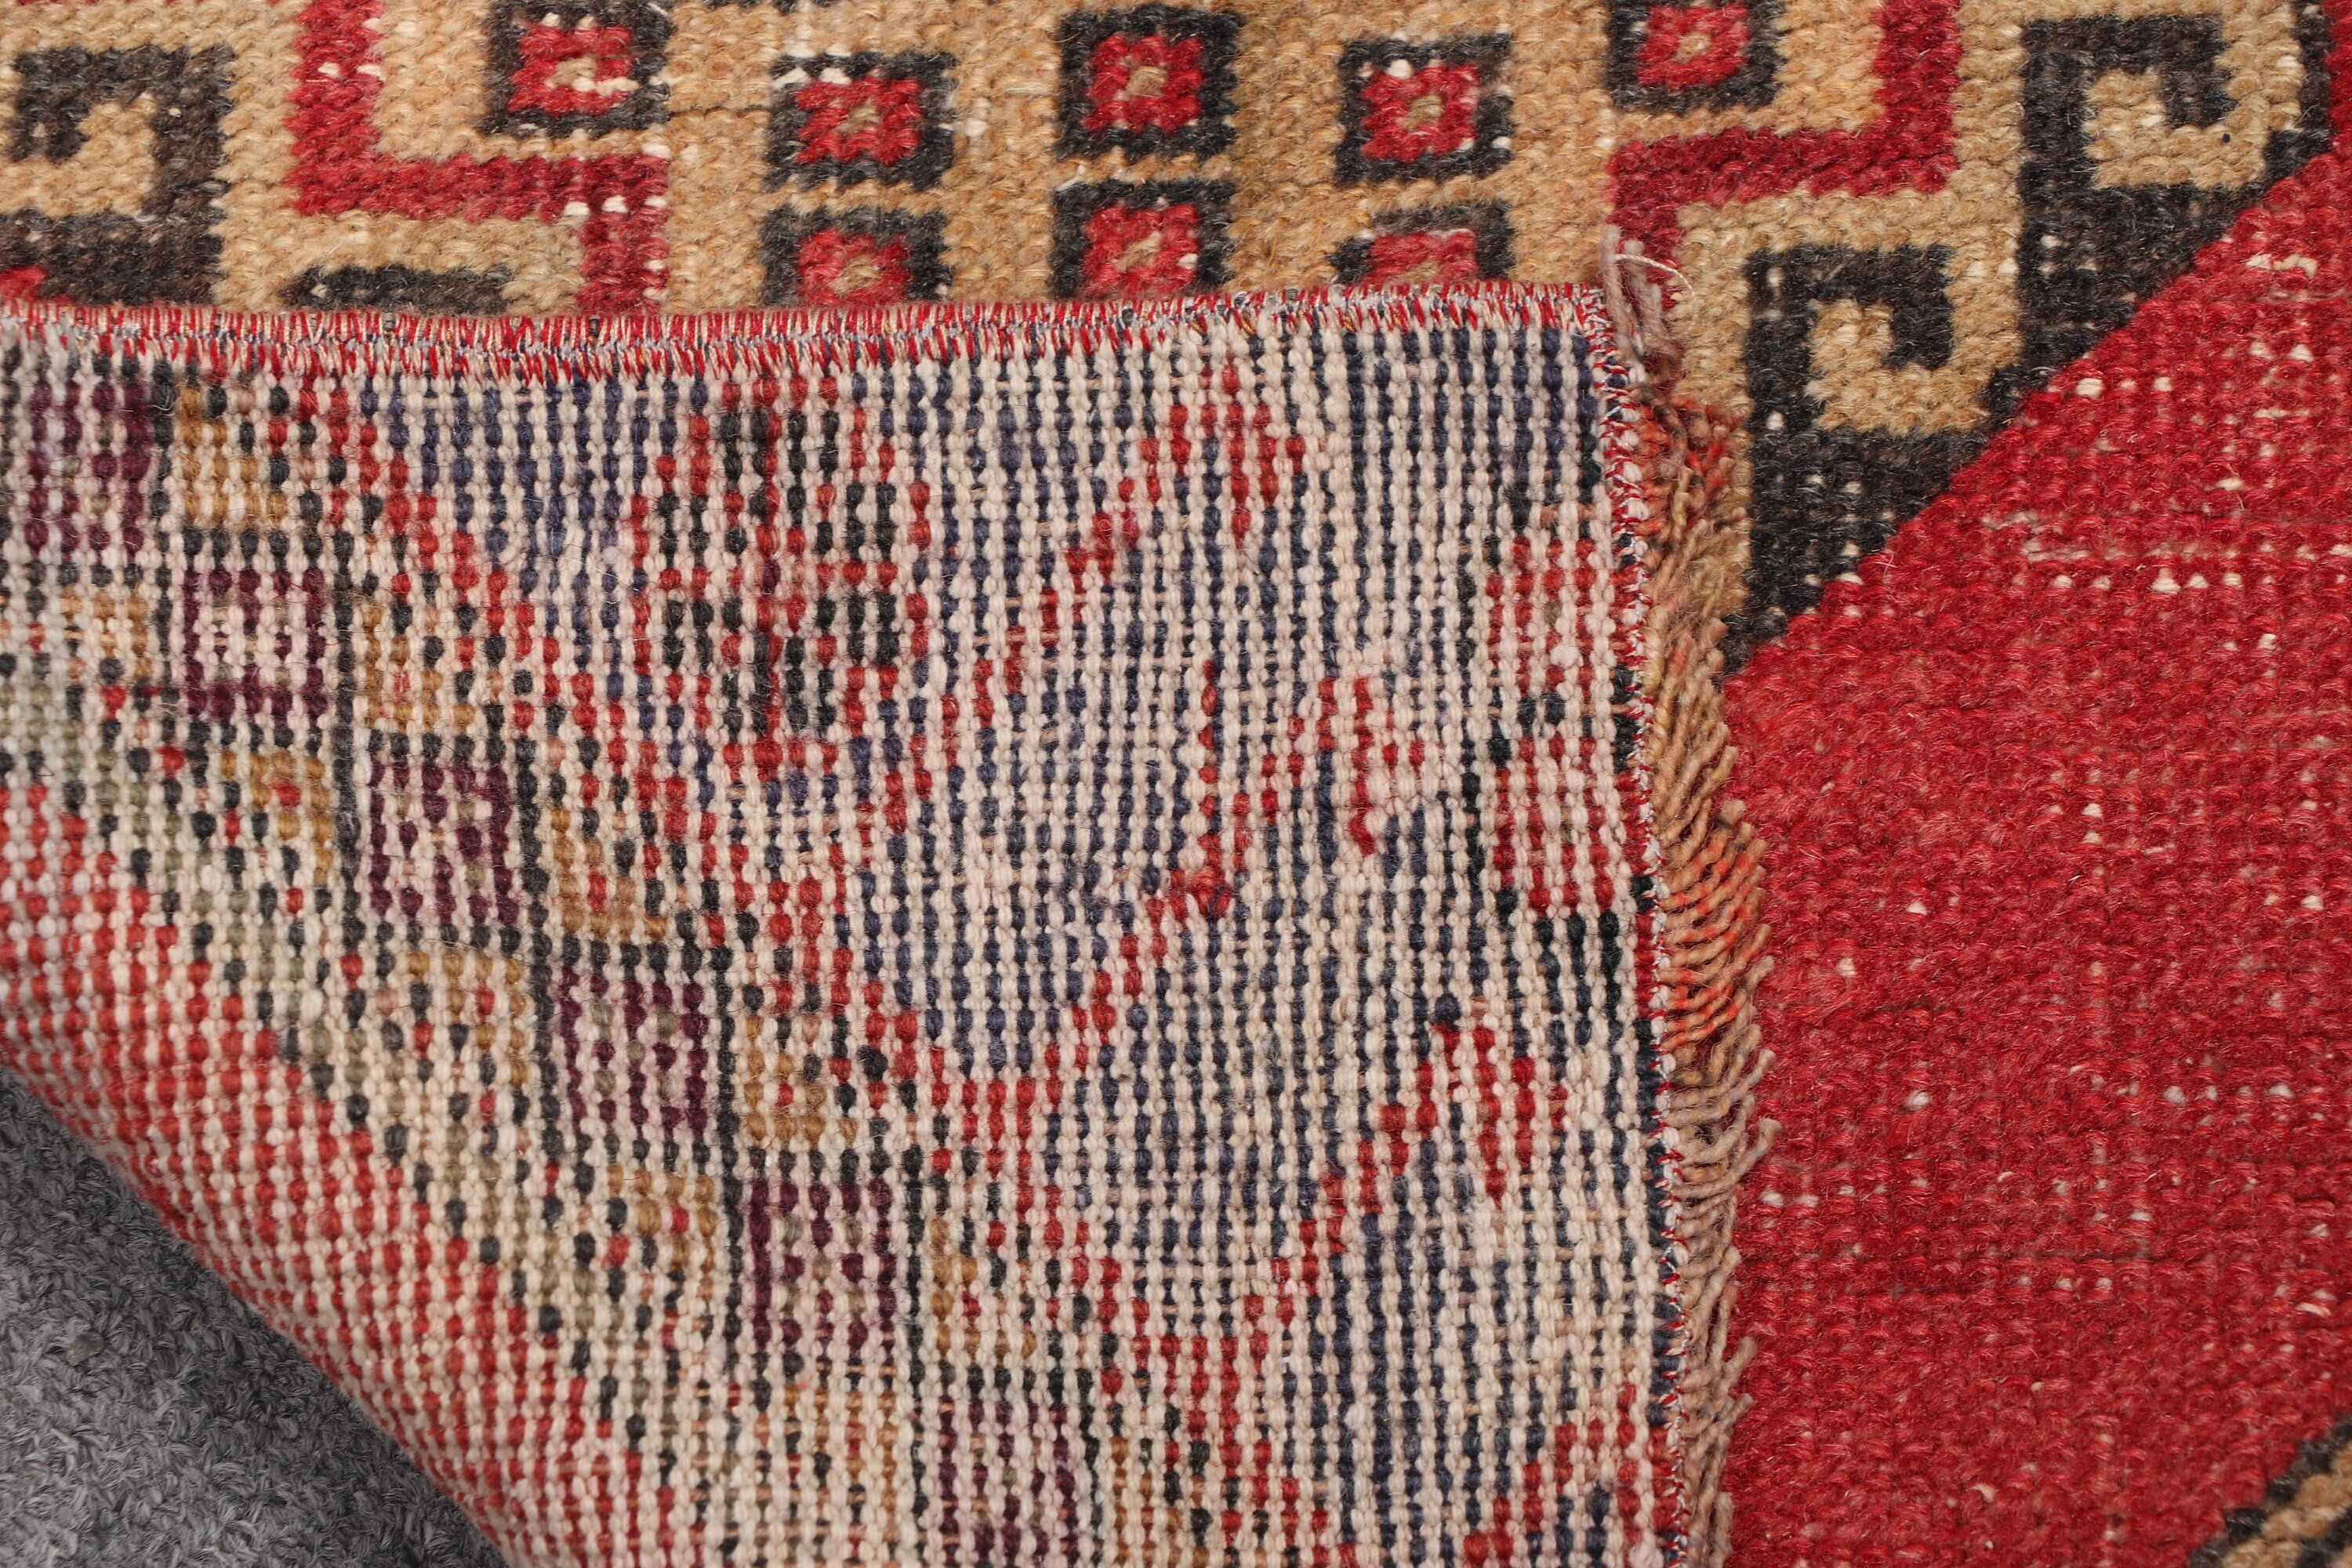 Cool Rug, Turkish Rugs, Red Anatolian Rug, Wall Hanging Rug, Vintage Rug, Rugs for Bedroom, 1.3x2.5 ft Small Rug, Nursery Rugs, Wool Rugs